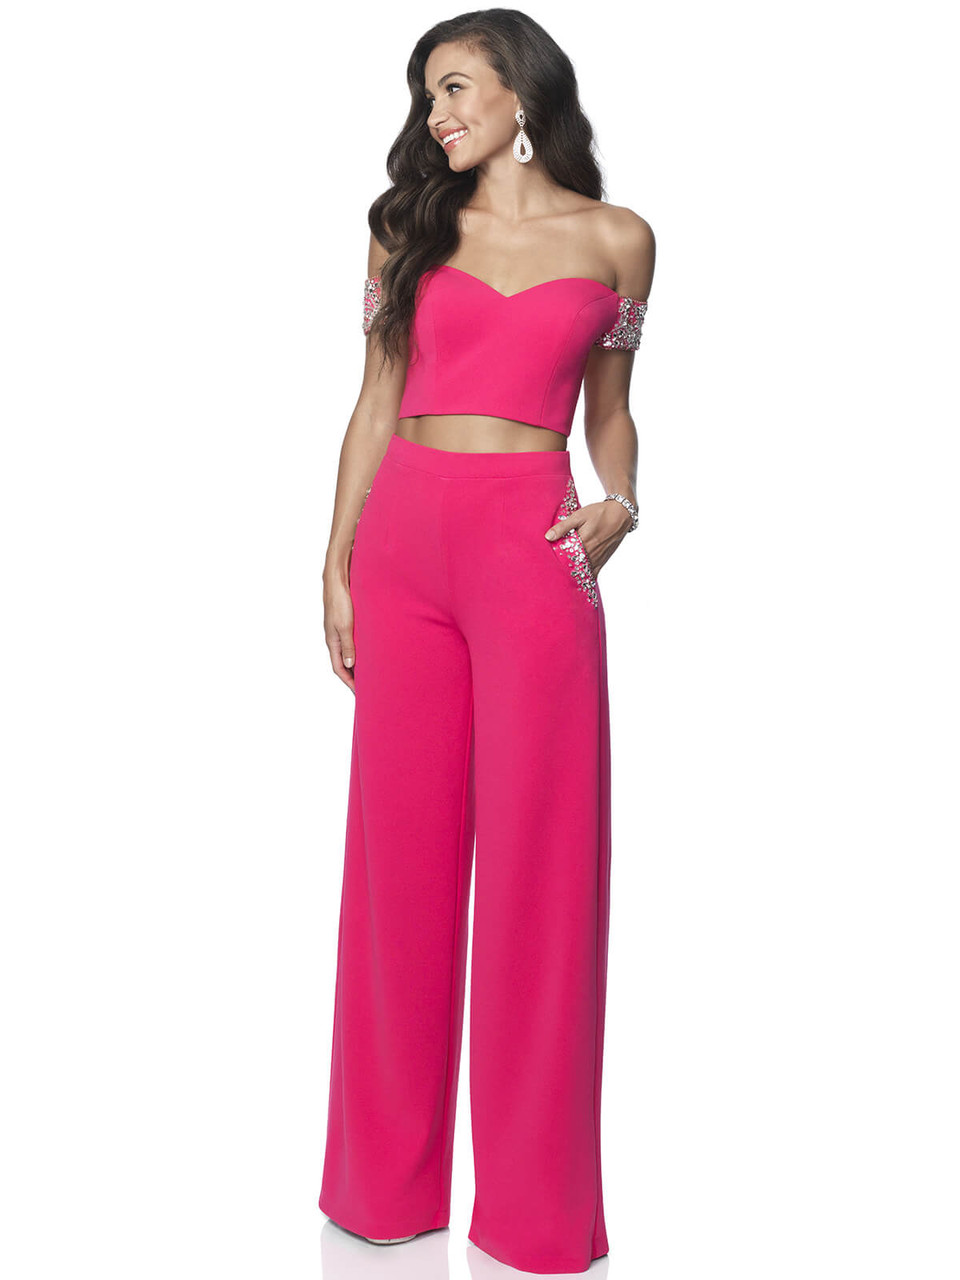 Vibrant pink formal flowing pants